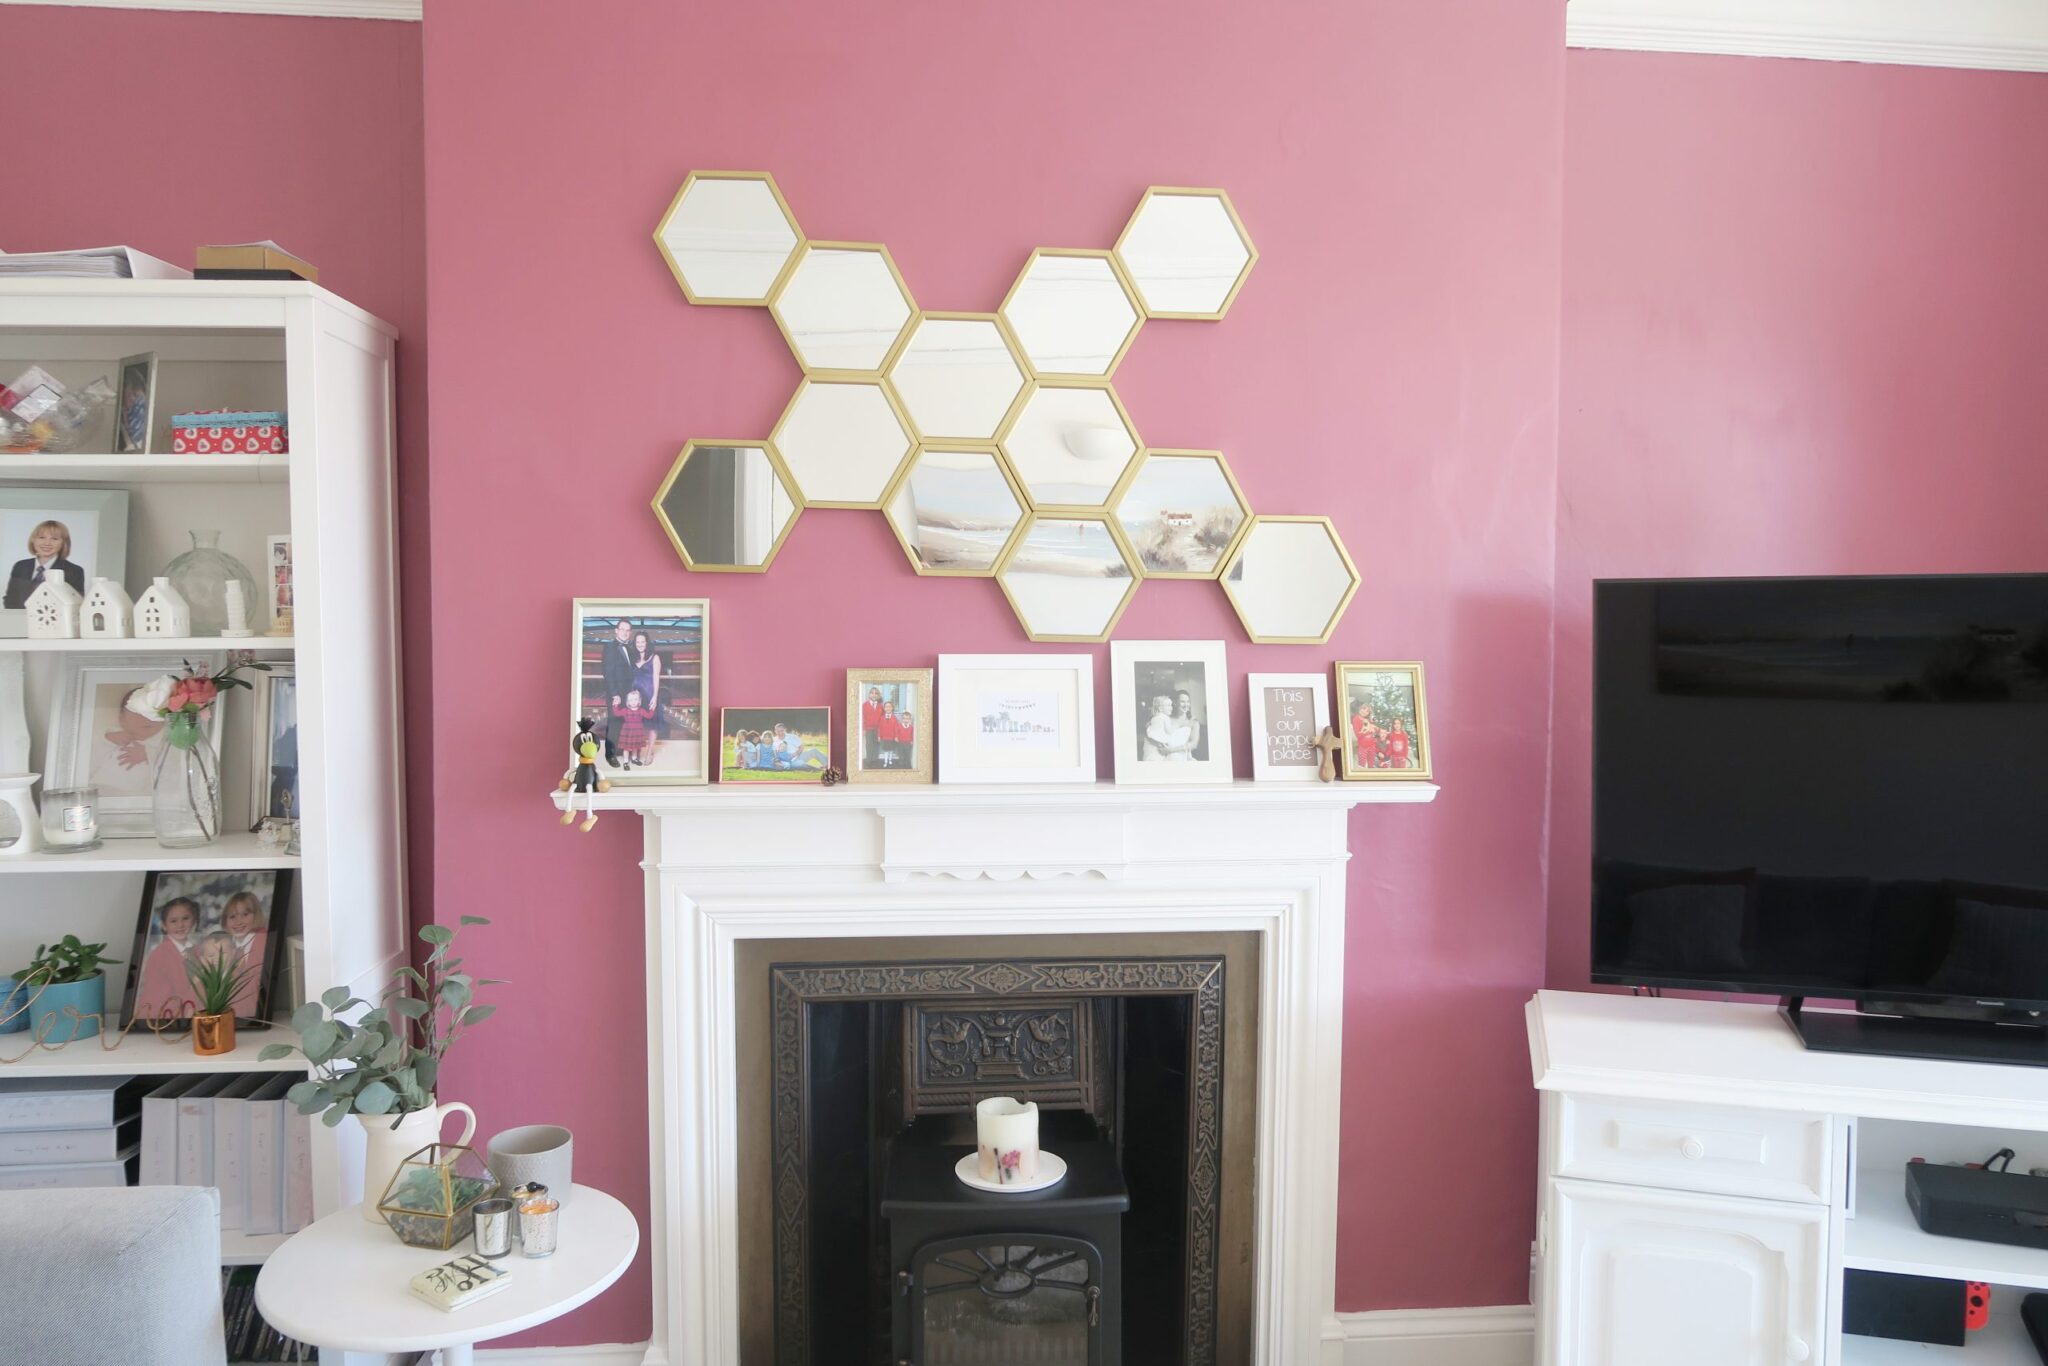 gold hexagonal mirror above a fireplace on a pink wall